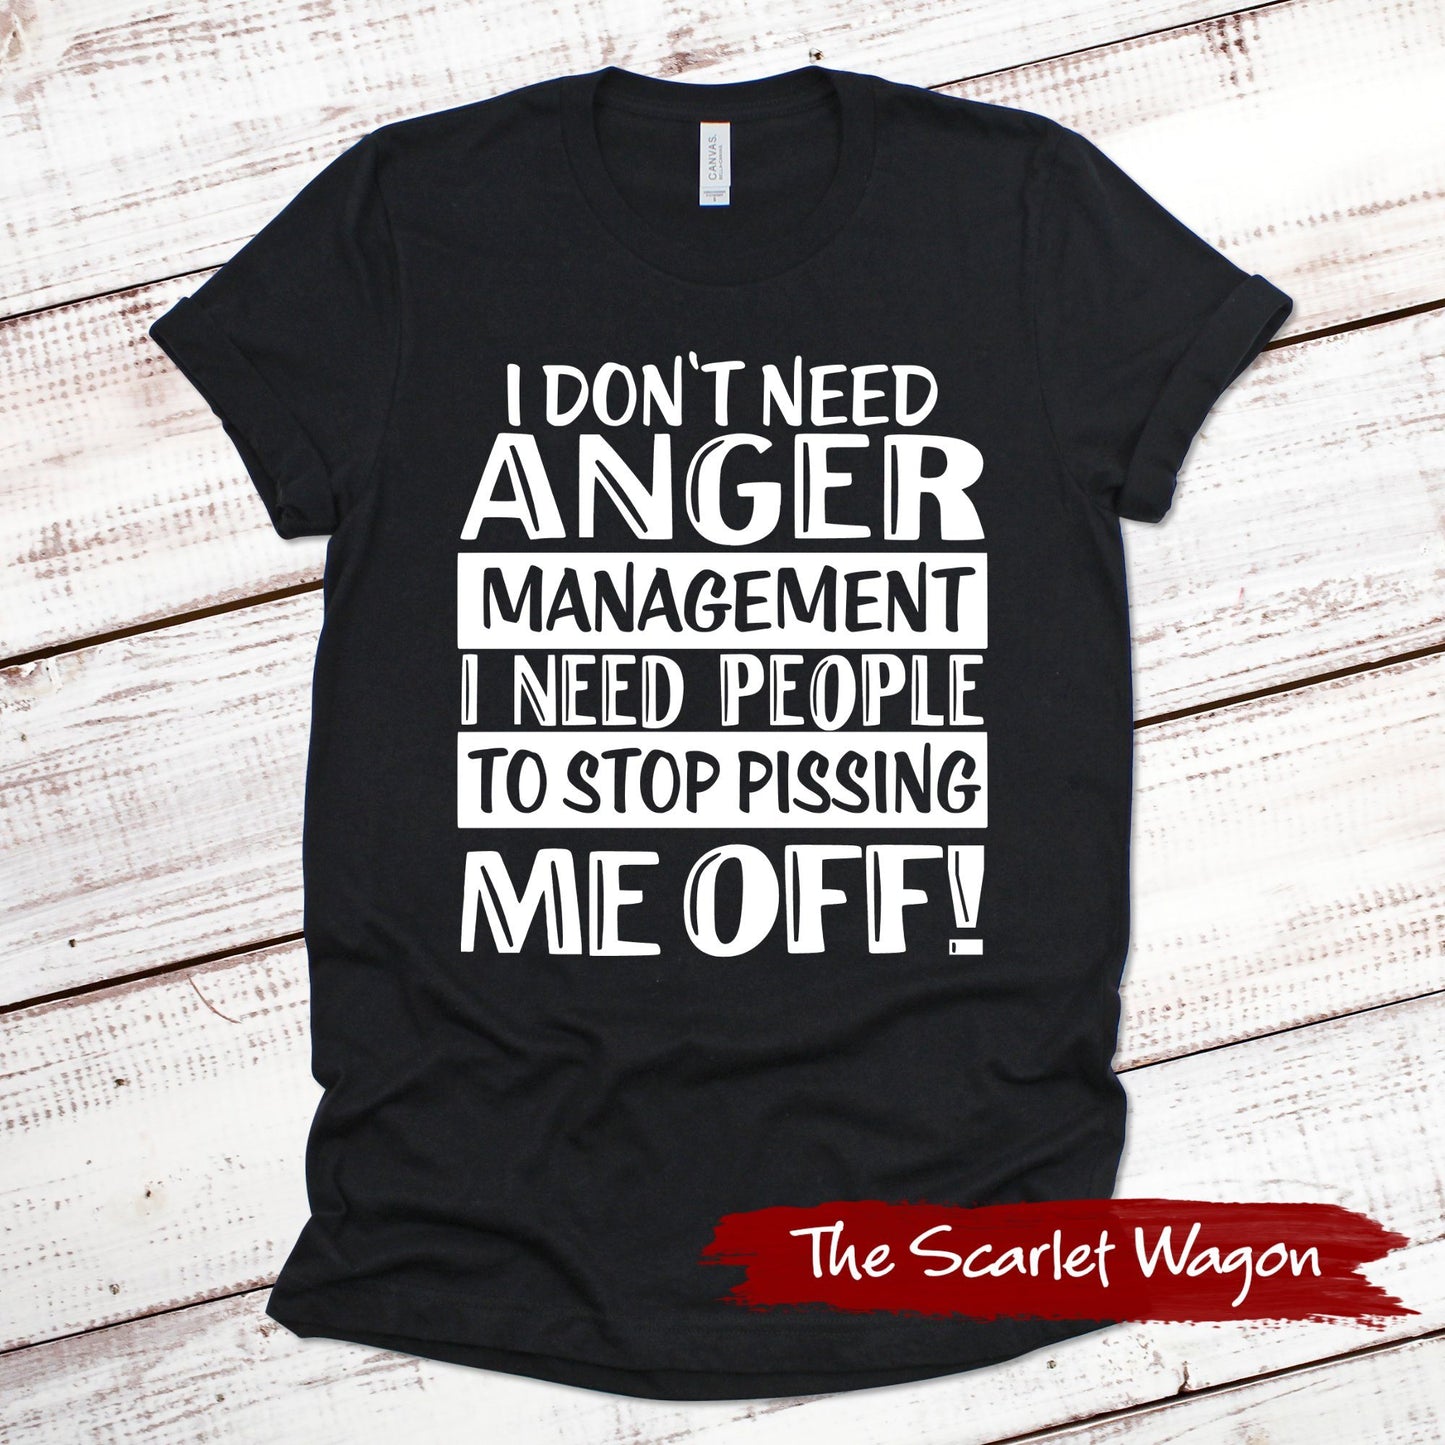 I Don't Need Anger Management Funny Shirt Scarlet Wagon Black XS 